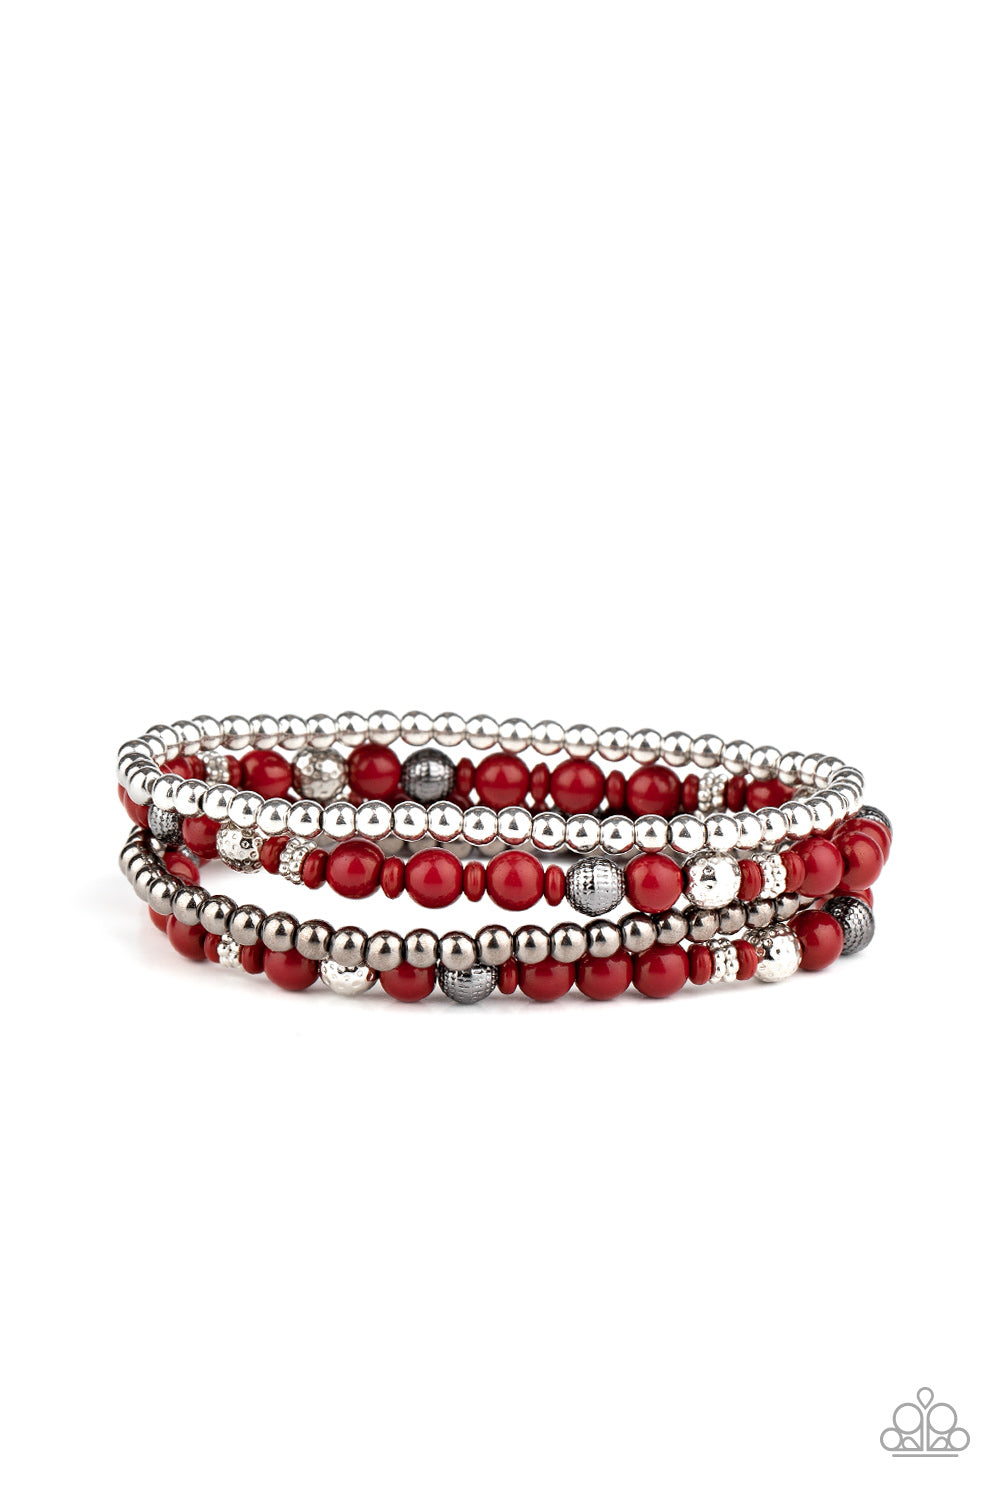 Stacked Style Maker-Red Bracelet